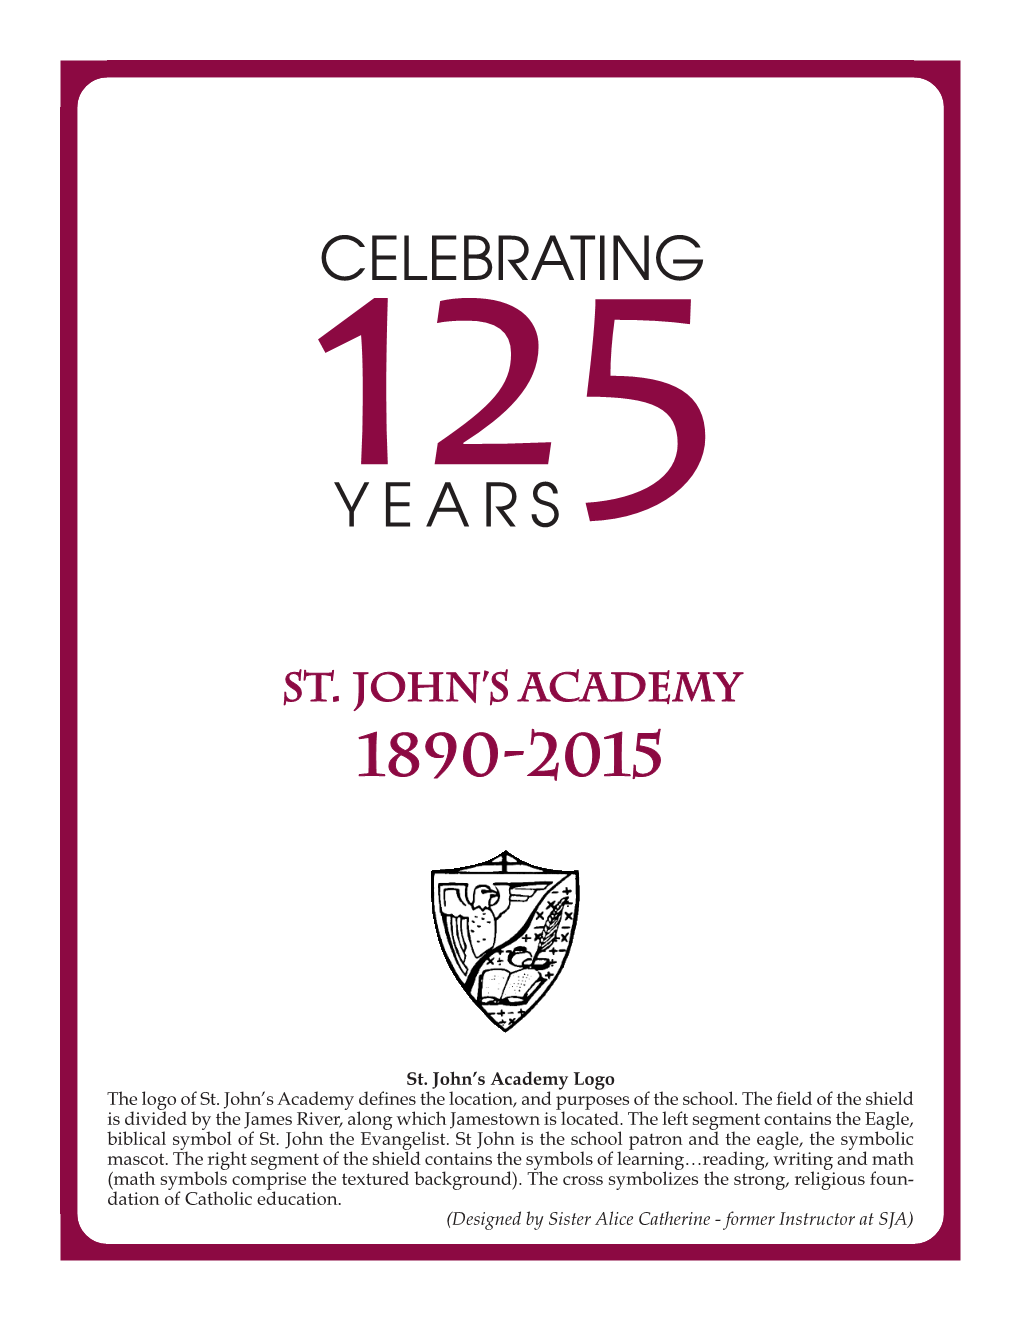 St. John's Academy, 1890-2015